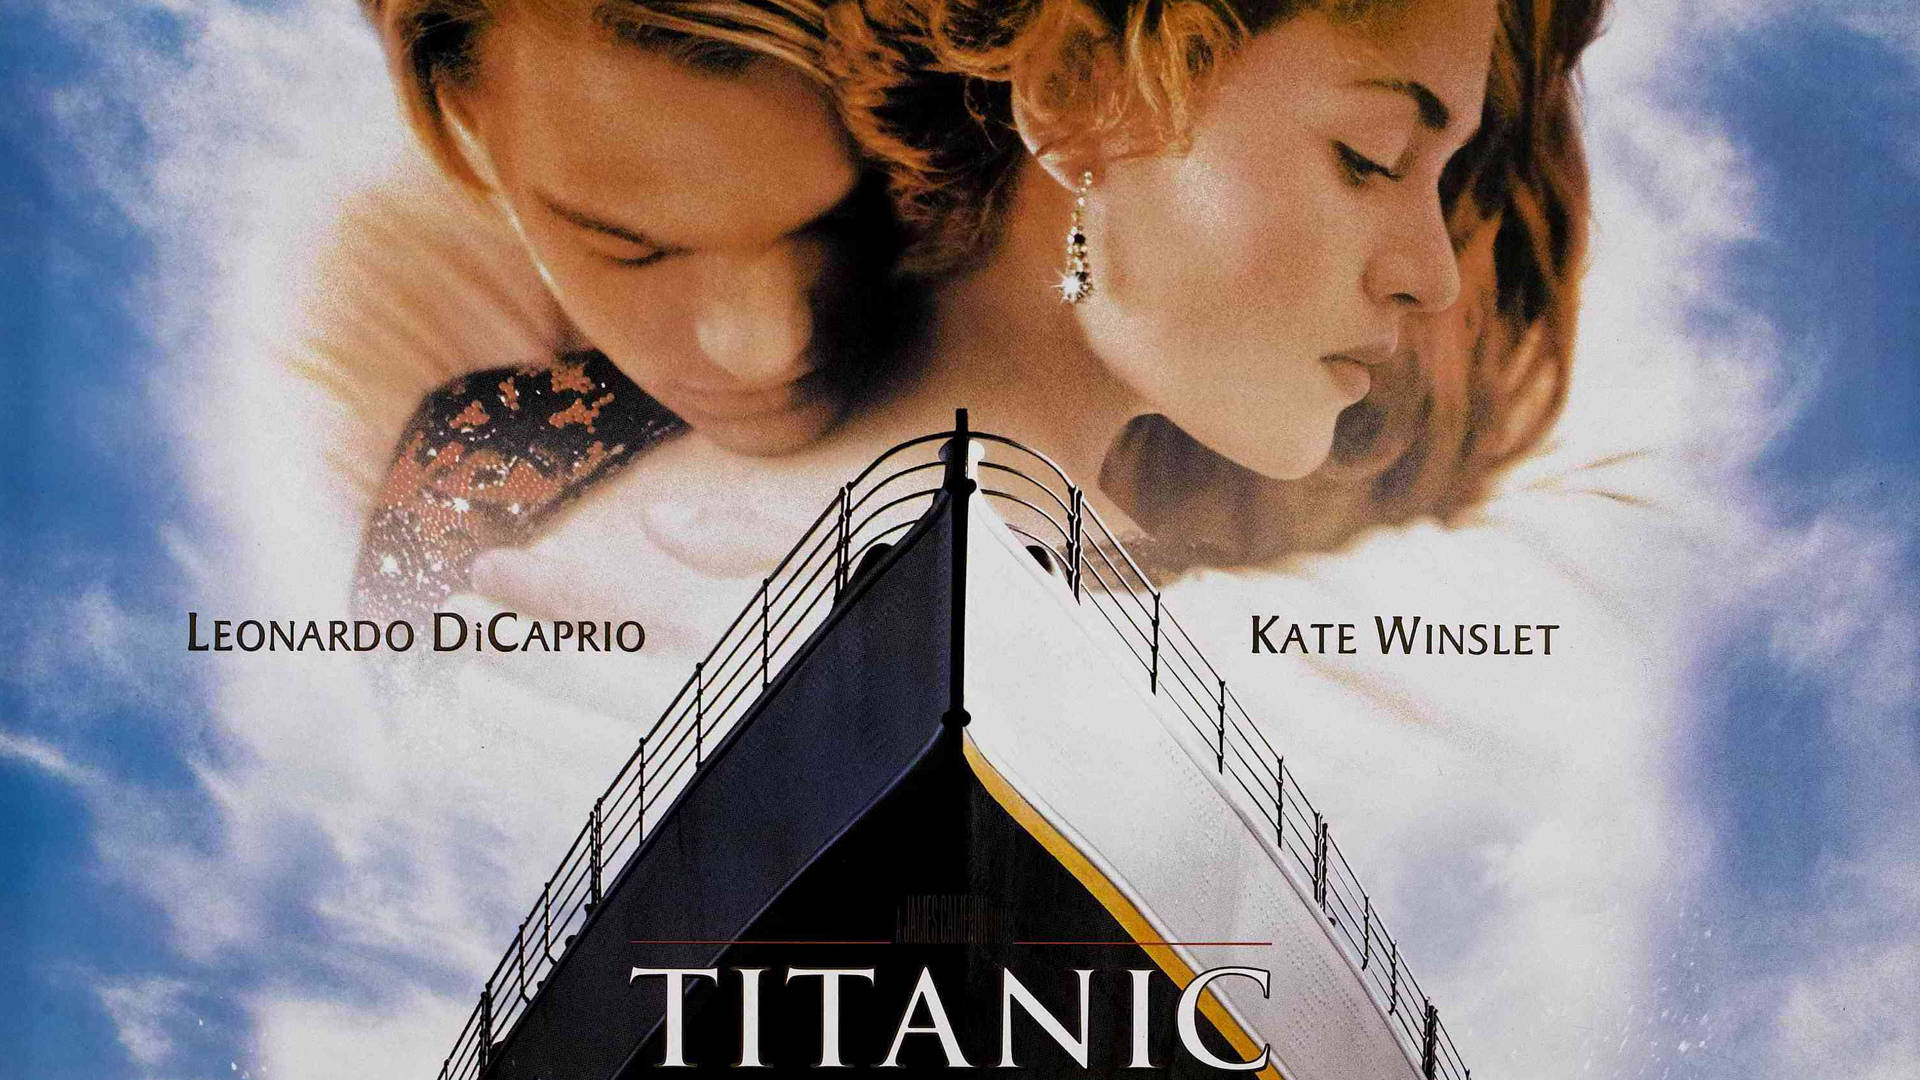 Titanic Movie Poster Background